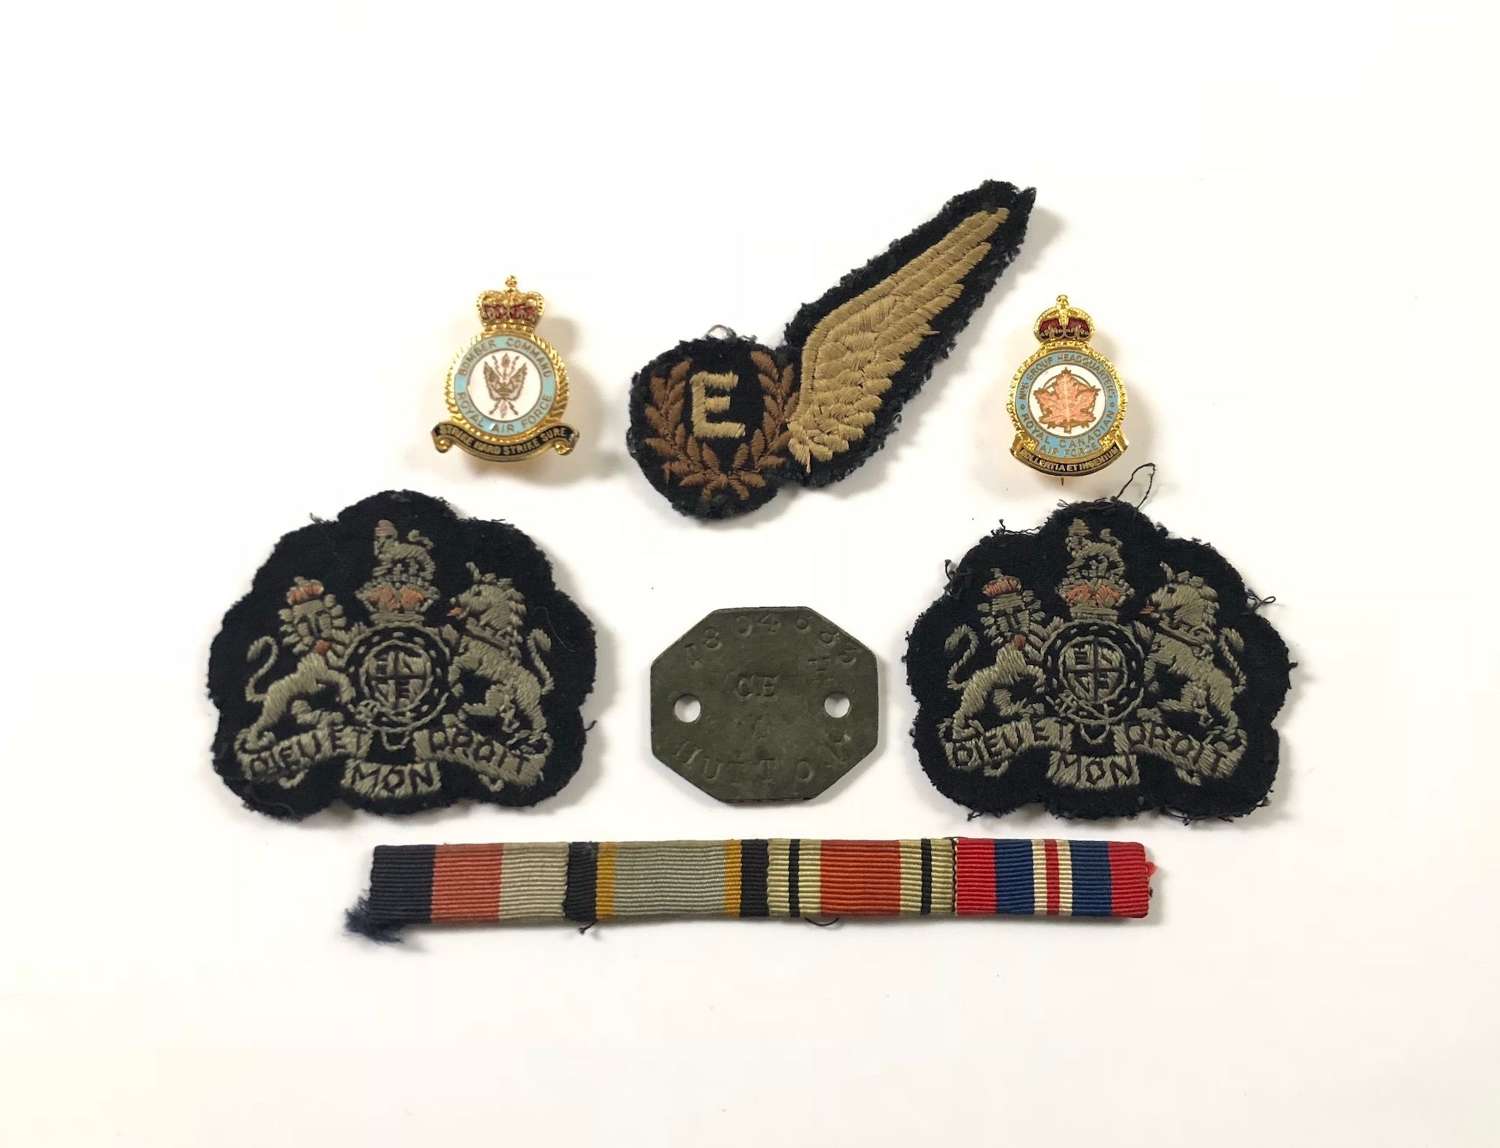 WW2 RAF POW Attributed Badges and Dog Tag.